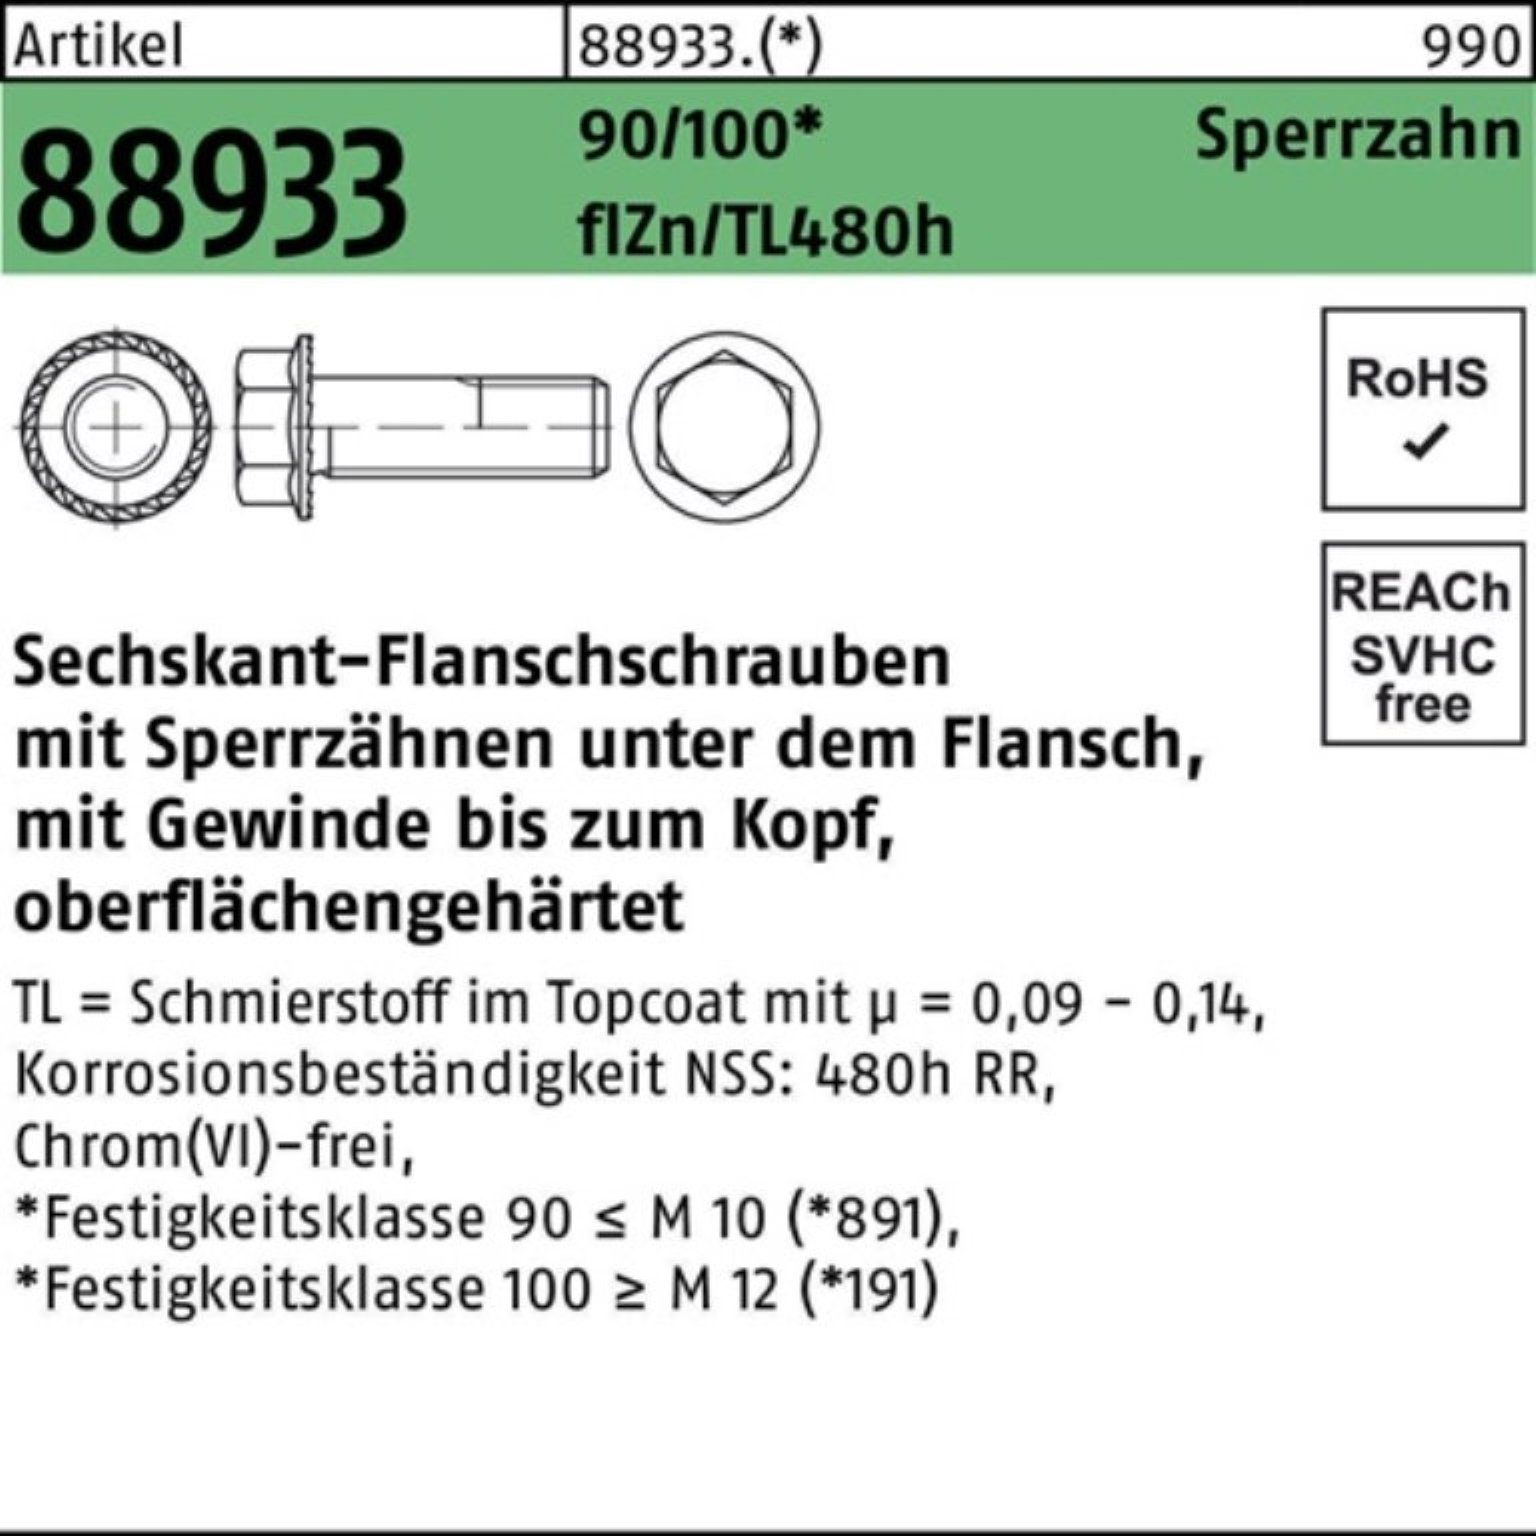 Reyher R VG 200er Sechskantflanschschraube Sperrz. 88933 90/100 M8x12 Pack Schraube fl